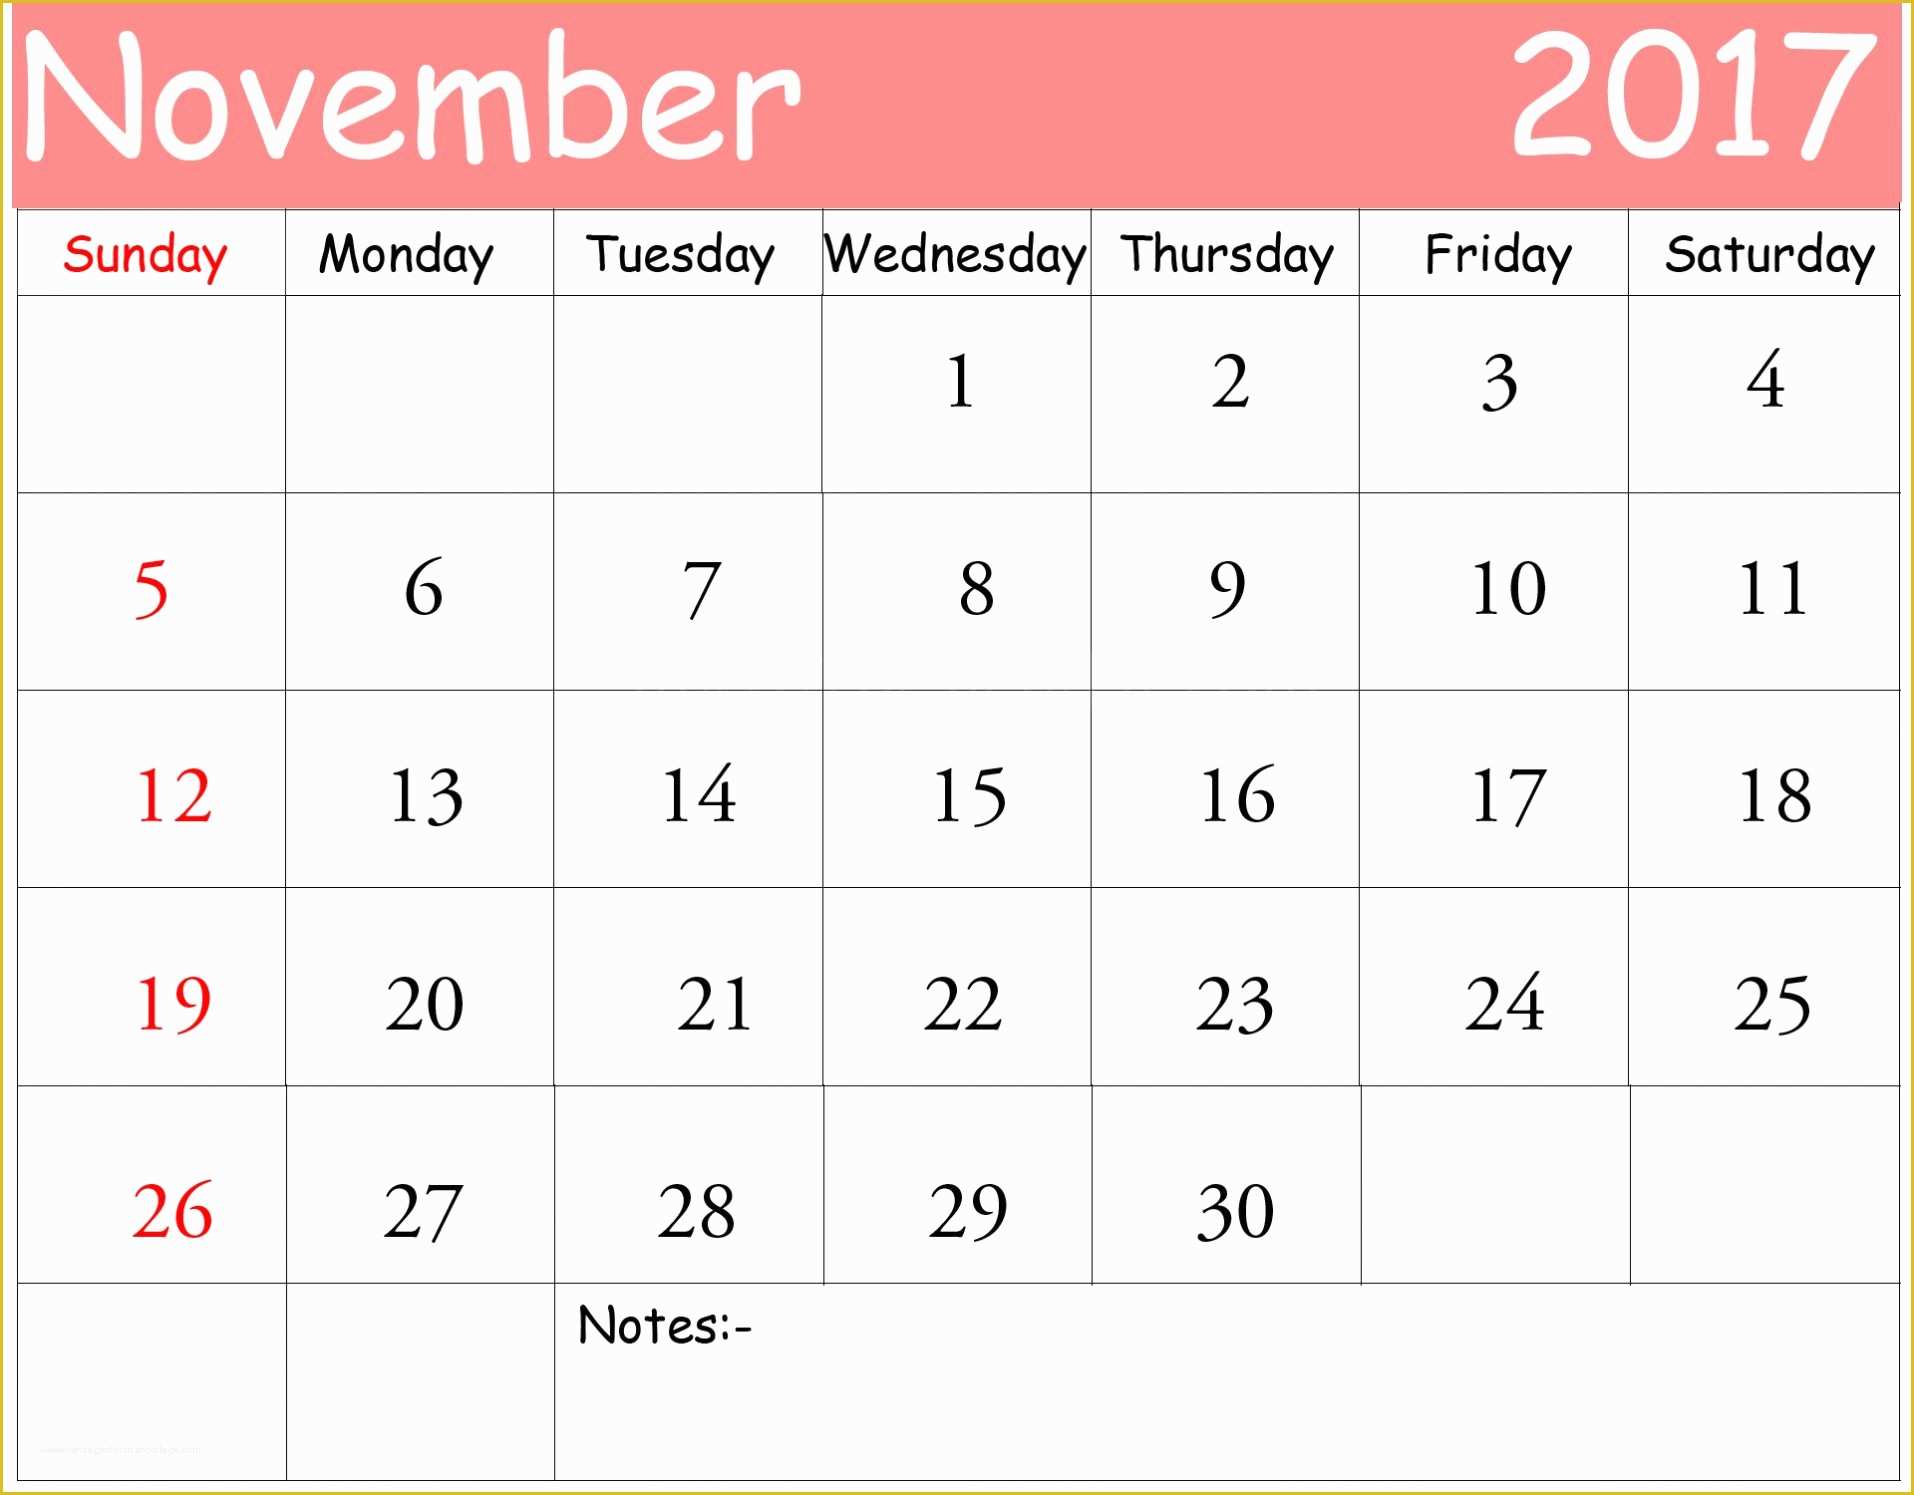 Free Calendar Template 2017 November Of November 2017 Calendar Printable Template with Holidays Uk